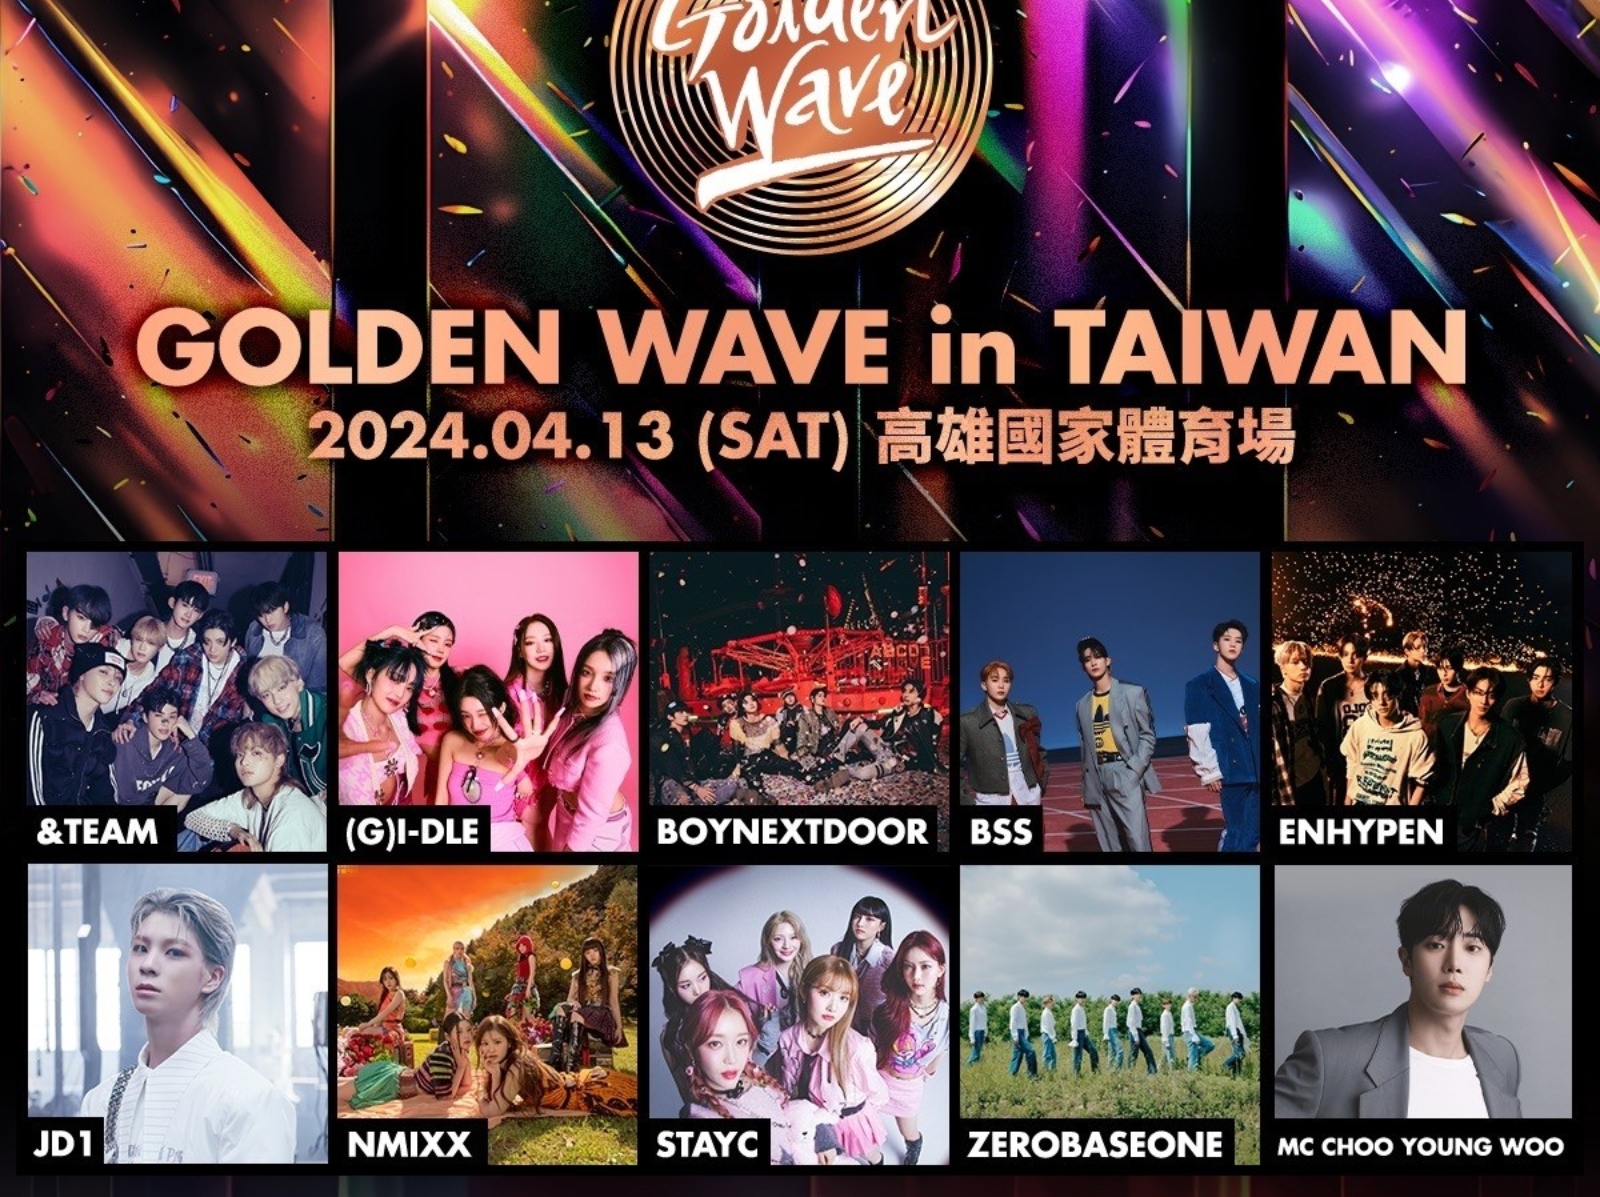 《GOLDEN WAVE 》陣容有 (G)I-DLE 、夫碩順、ZB1 等 9 組藝人，超級圓頂公布完整名單！